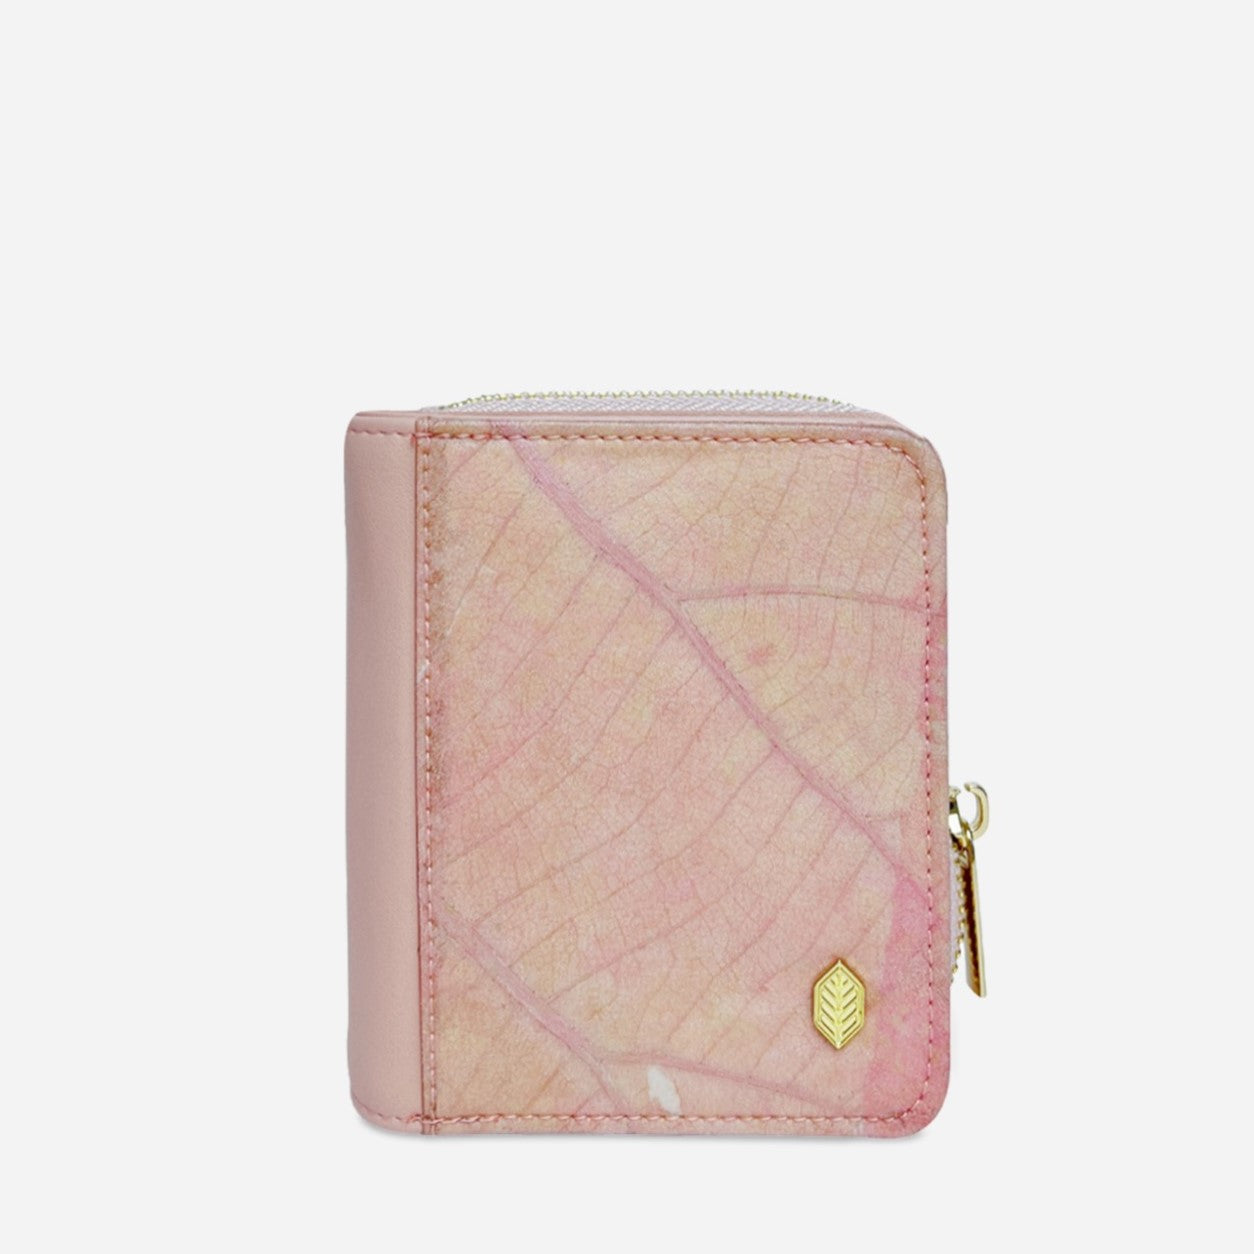 Vegan Leaf Leather Compact Zip Wallet Thamon Pink